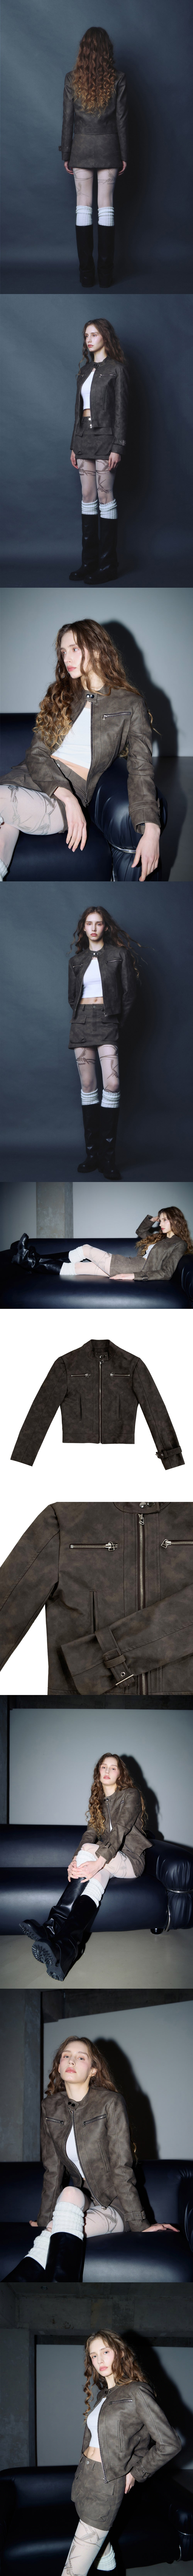 Sober leather jacket - brown